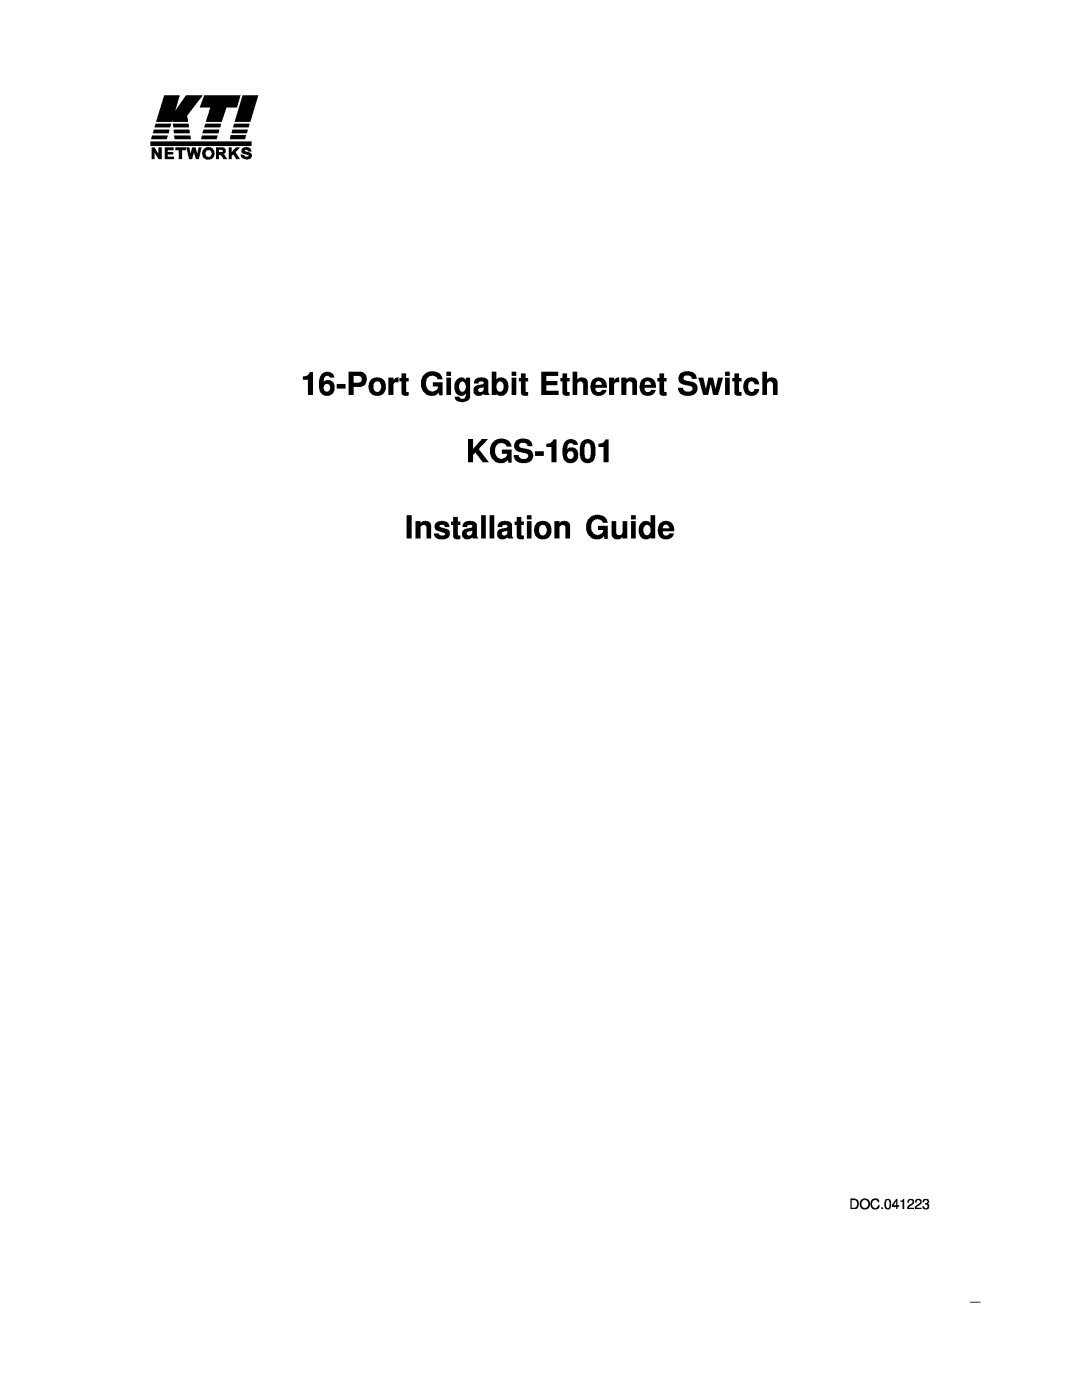 KTI Networks kgs-1601 manual Port Gigabit Ethernet Switch KGS-1601 Installation Guide, DOC.041223 